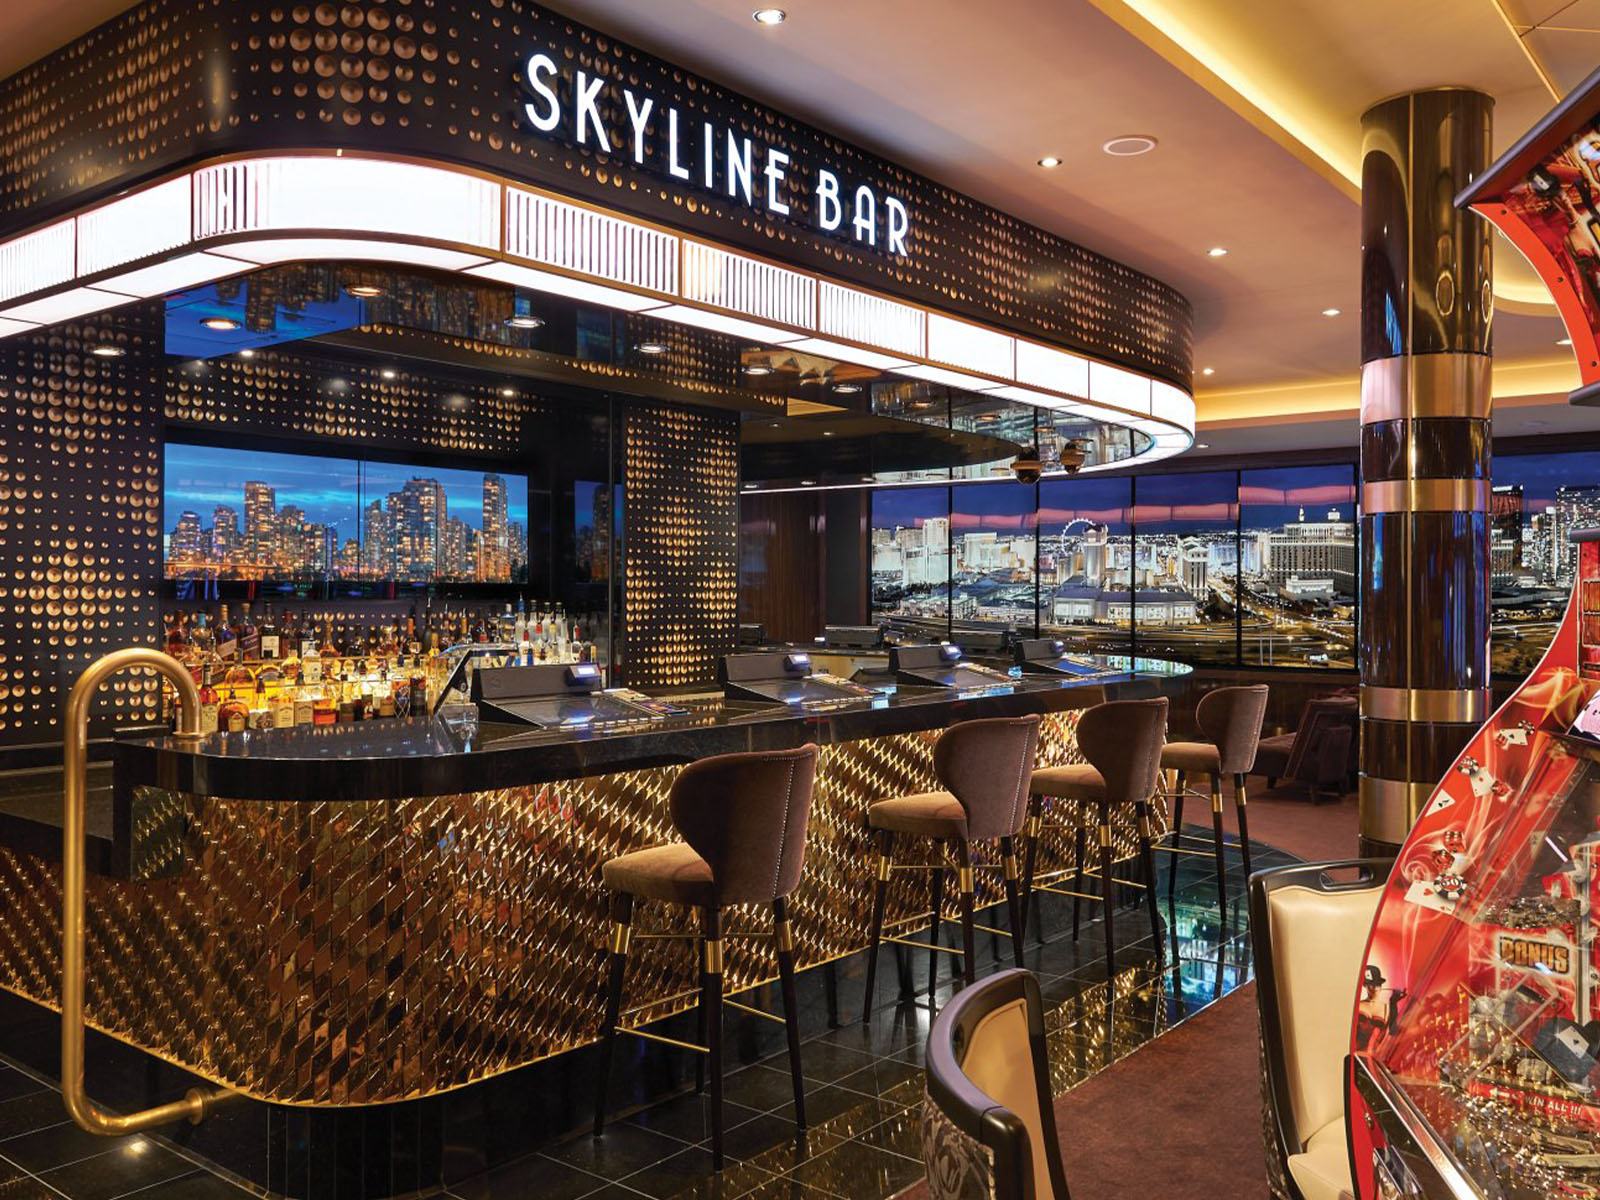 Norwegian's Skyline Bar